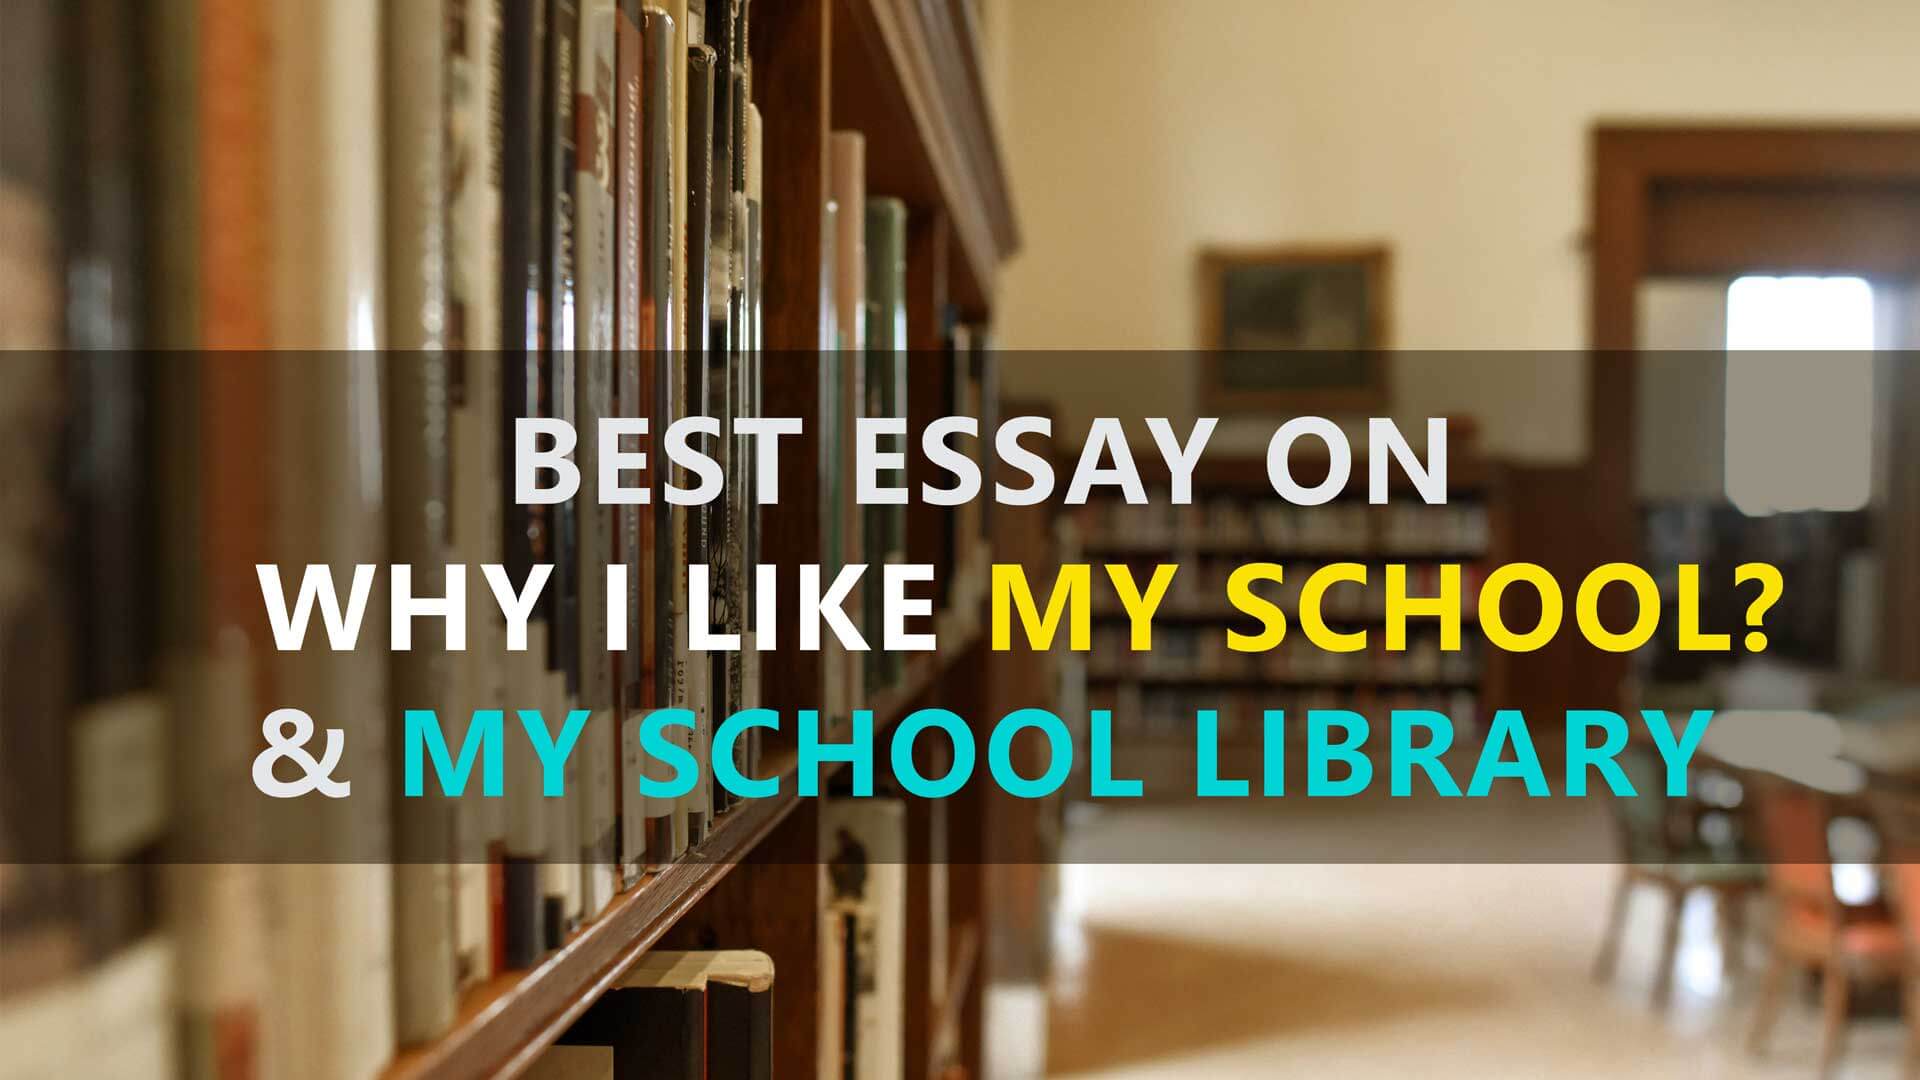 Best Essay on My School | My School Library